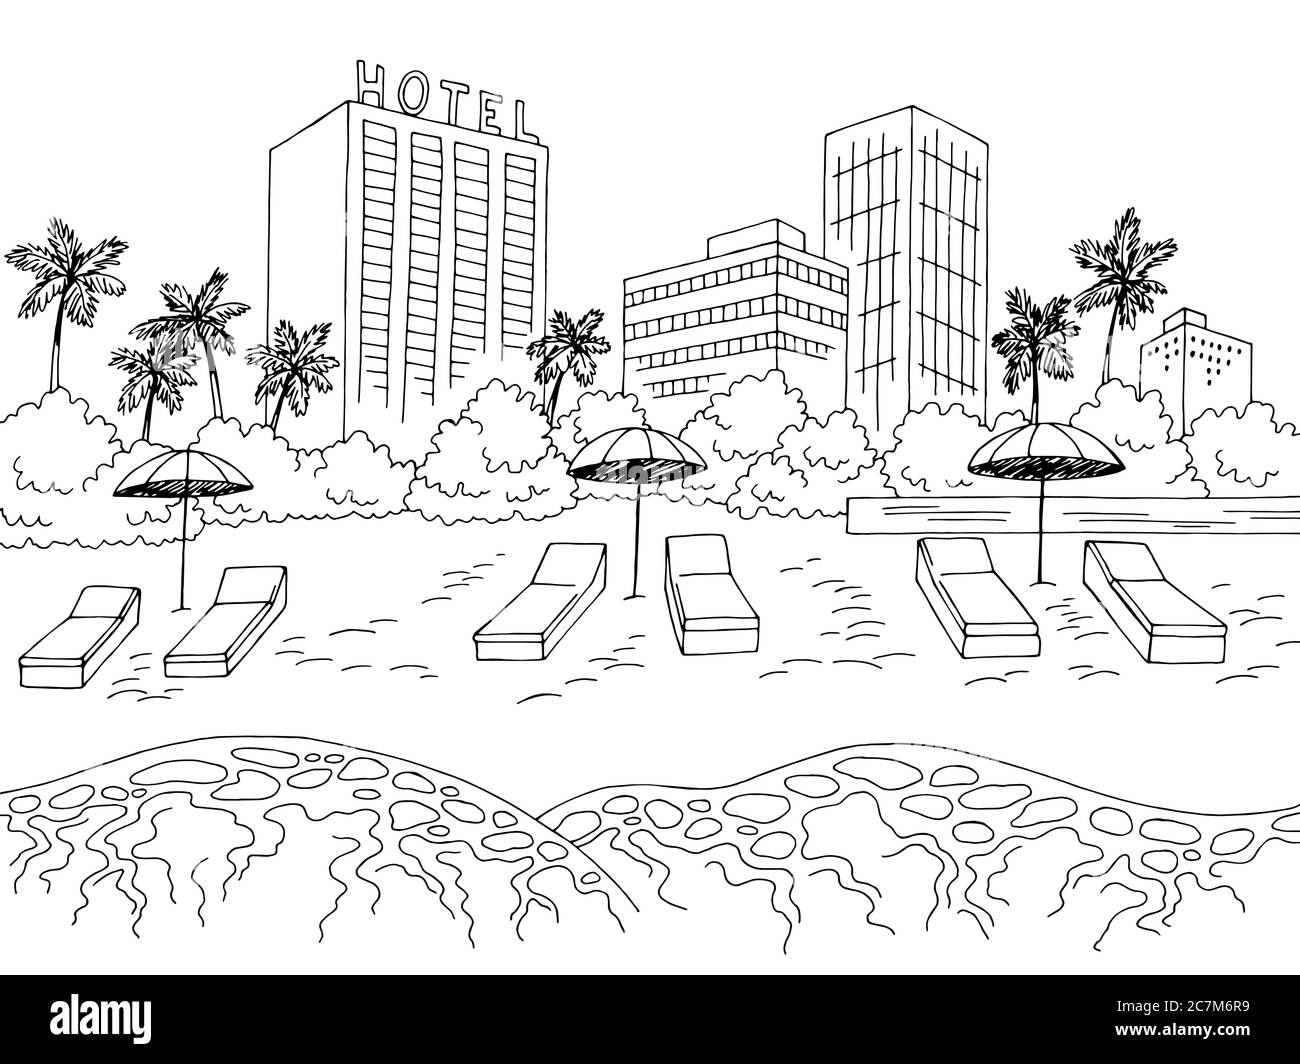 Stadt Strand Grafik schwarz weiß Landschaft Skizze Illustration Vektor Stock Vektor